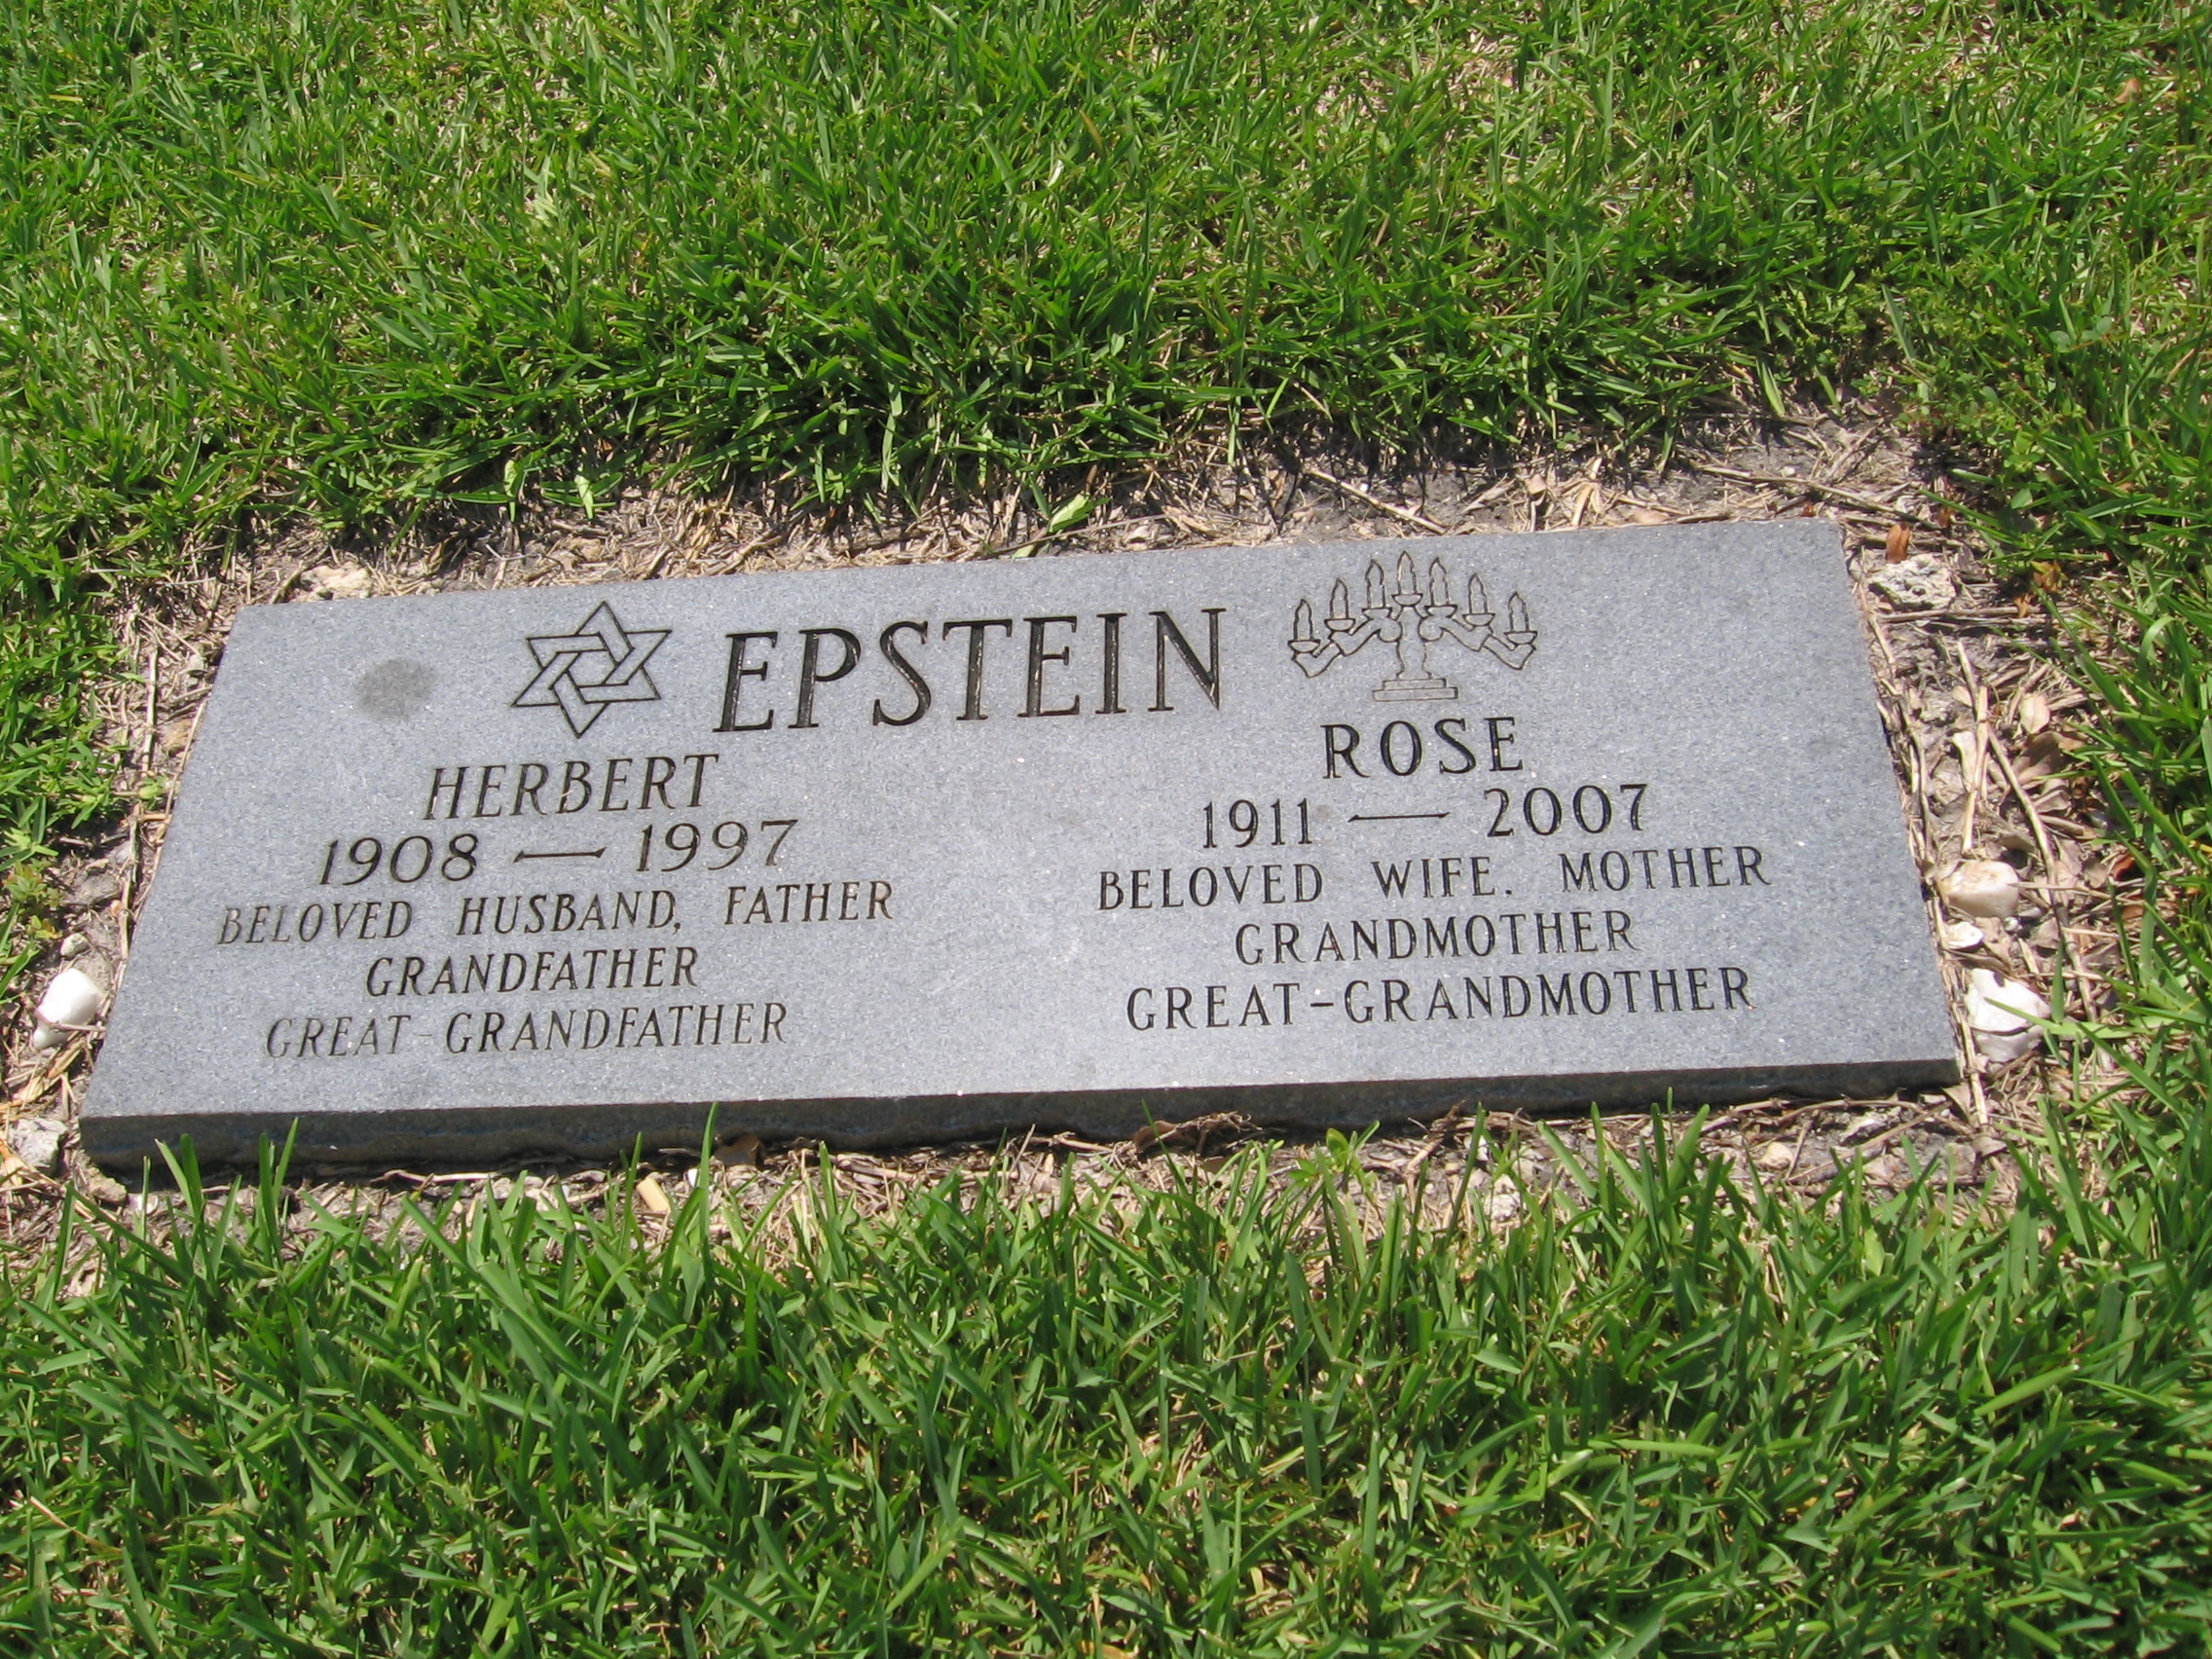 Rose Epstein